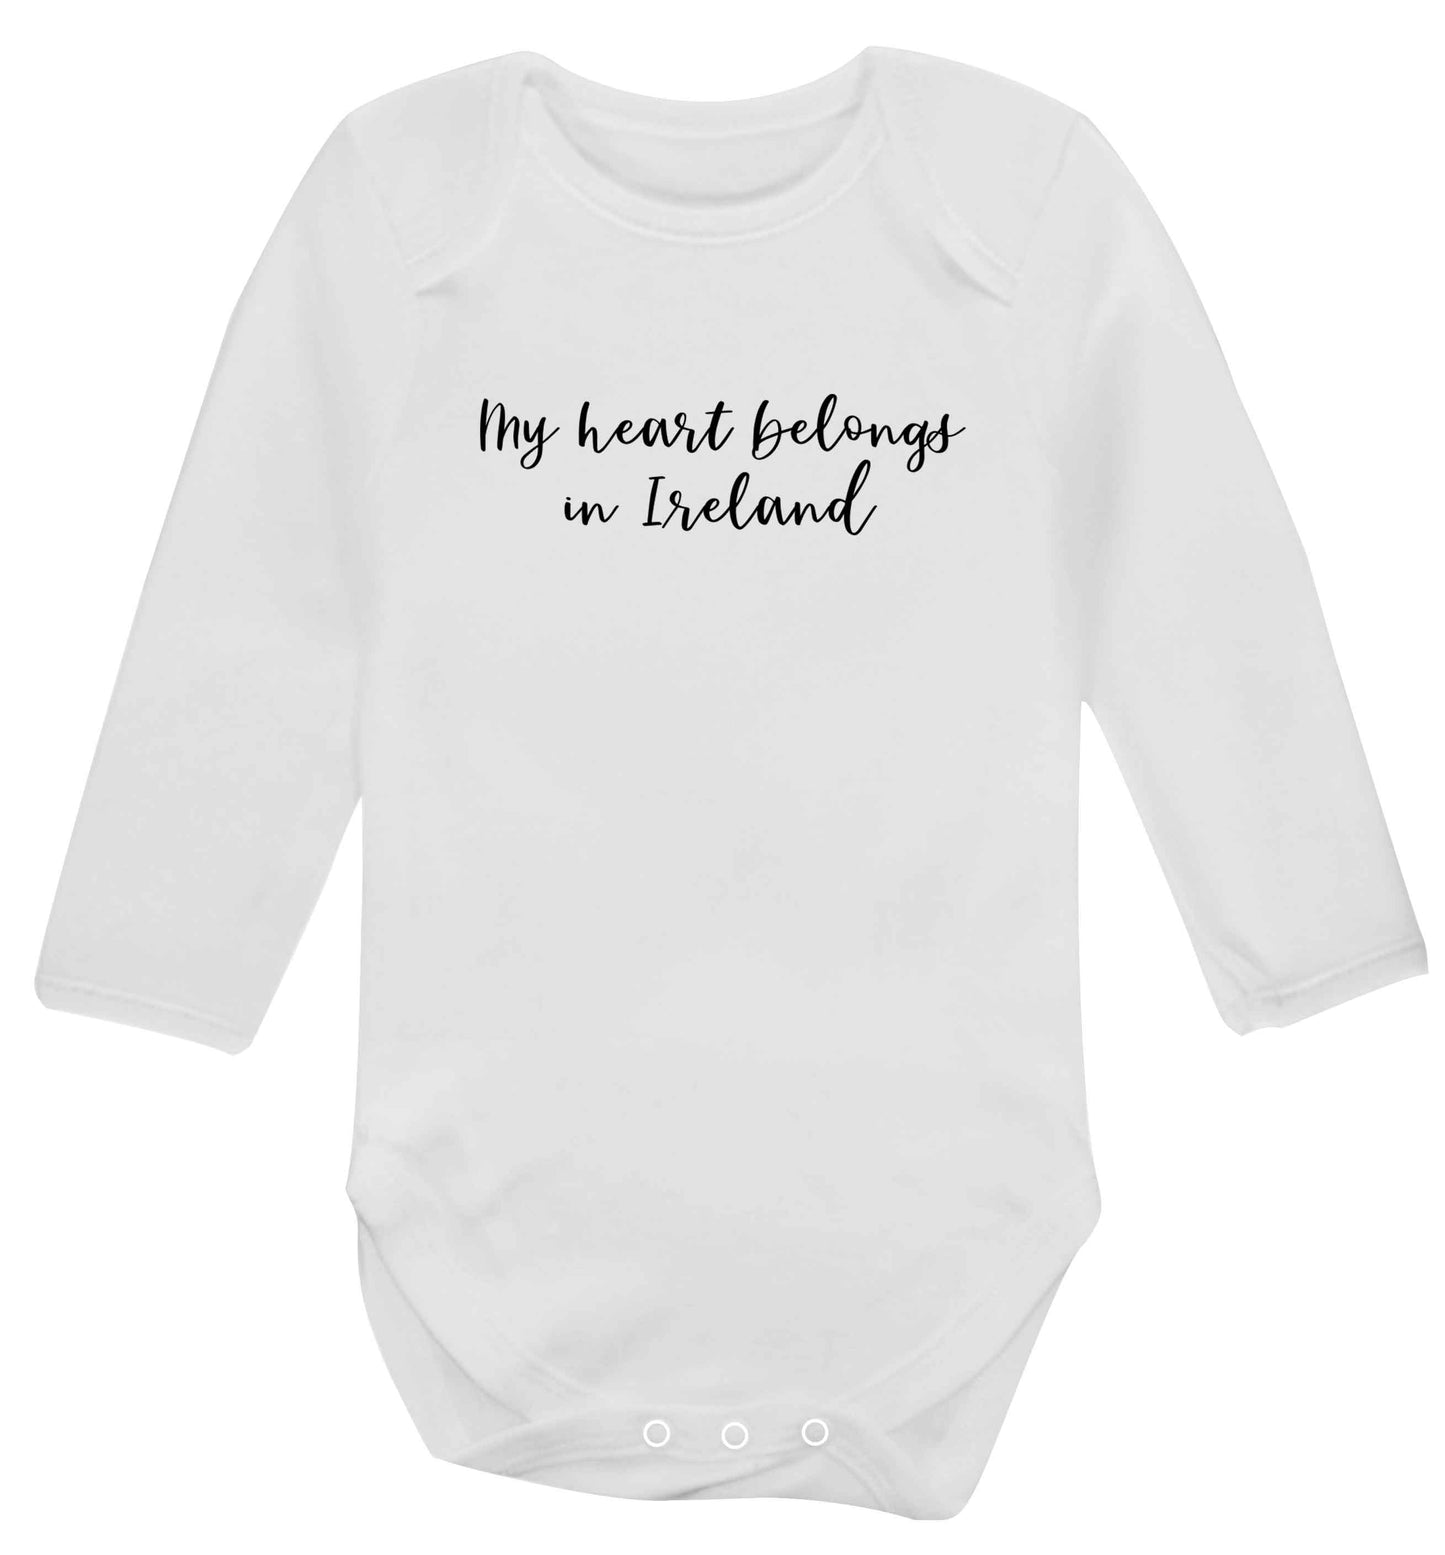 My heart belongs in Ireland baby vest long sleeved white 6-12 months